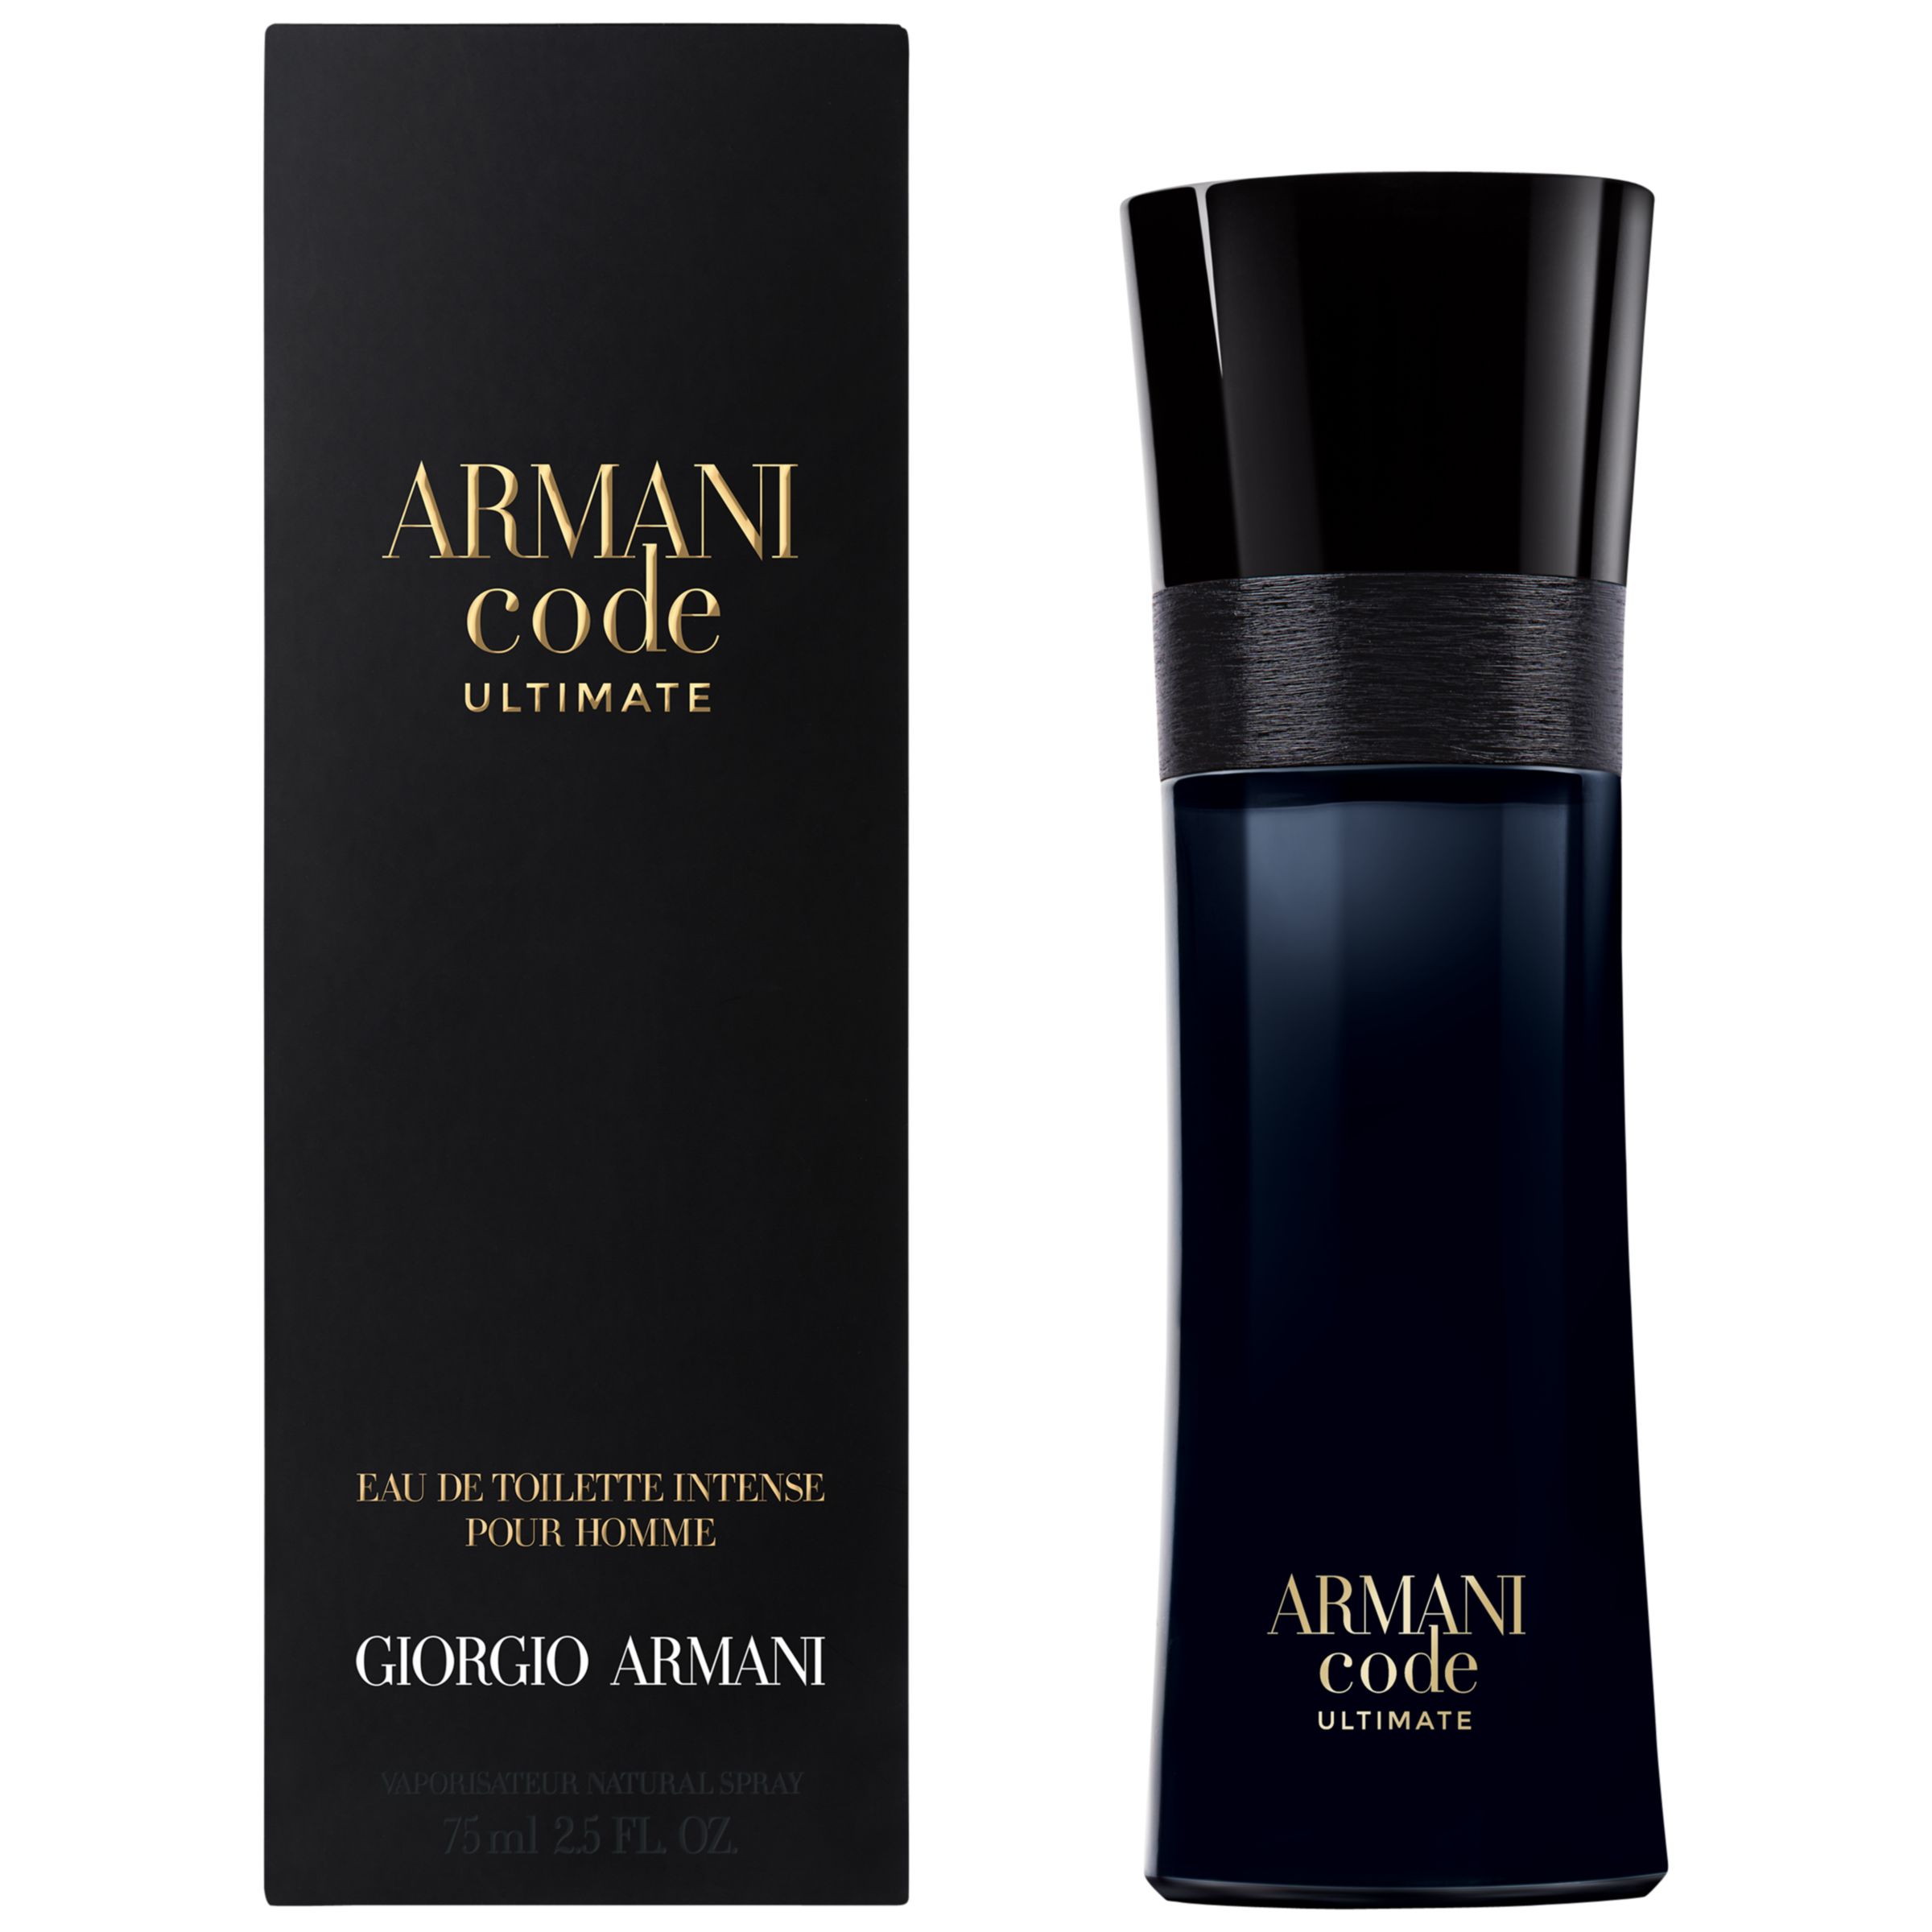 armani code men's aftershave gift set